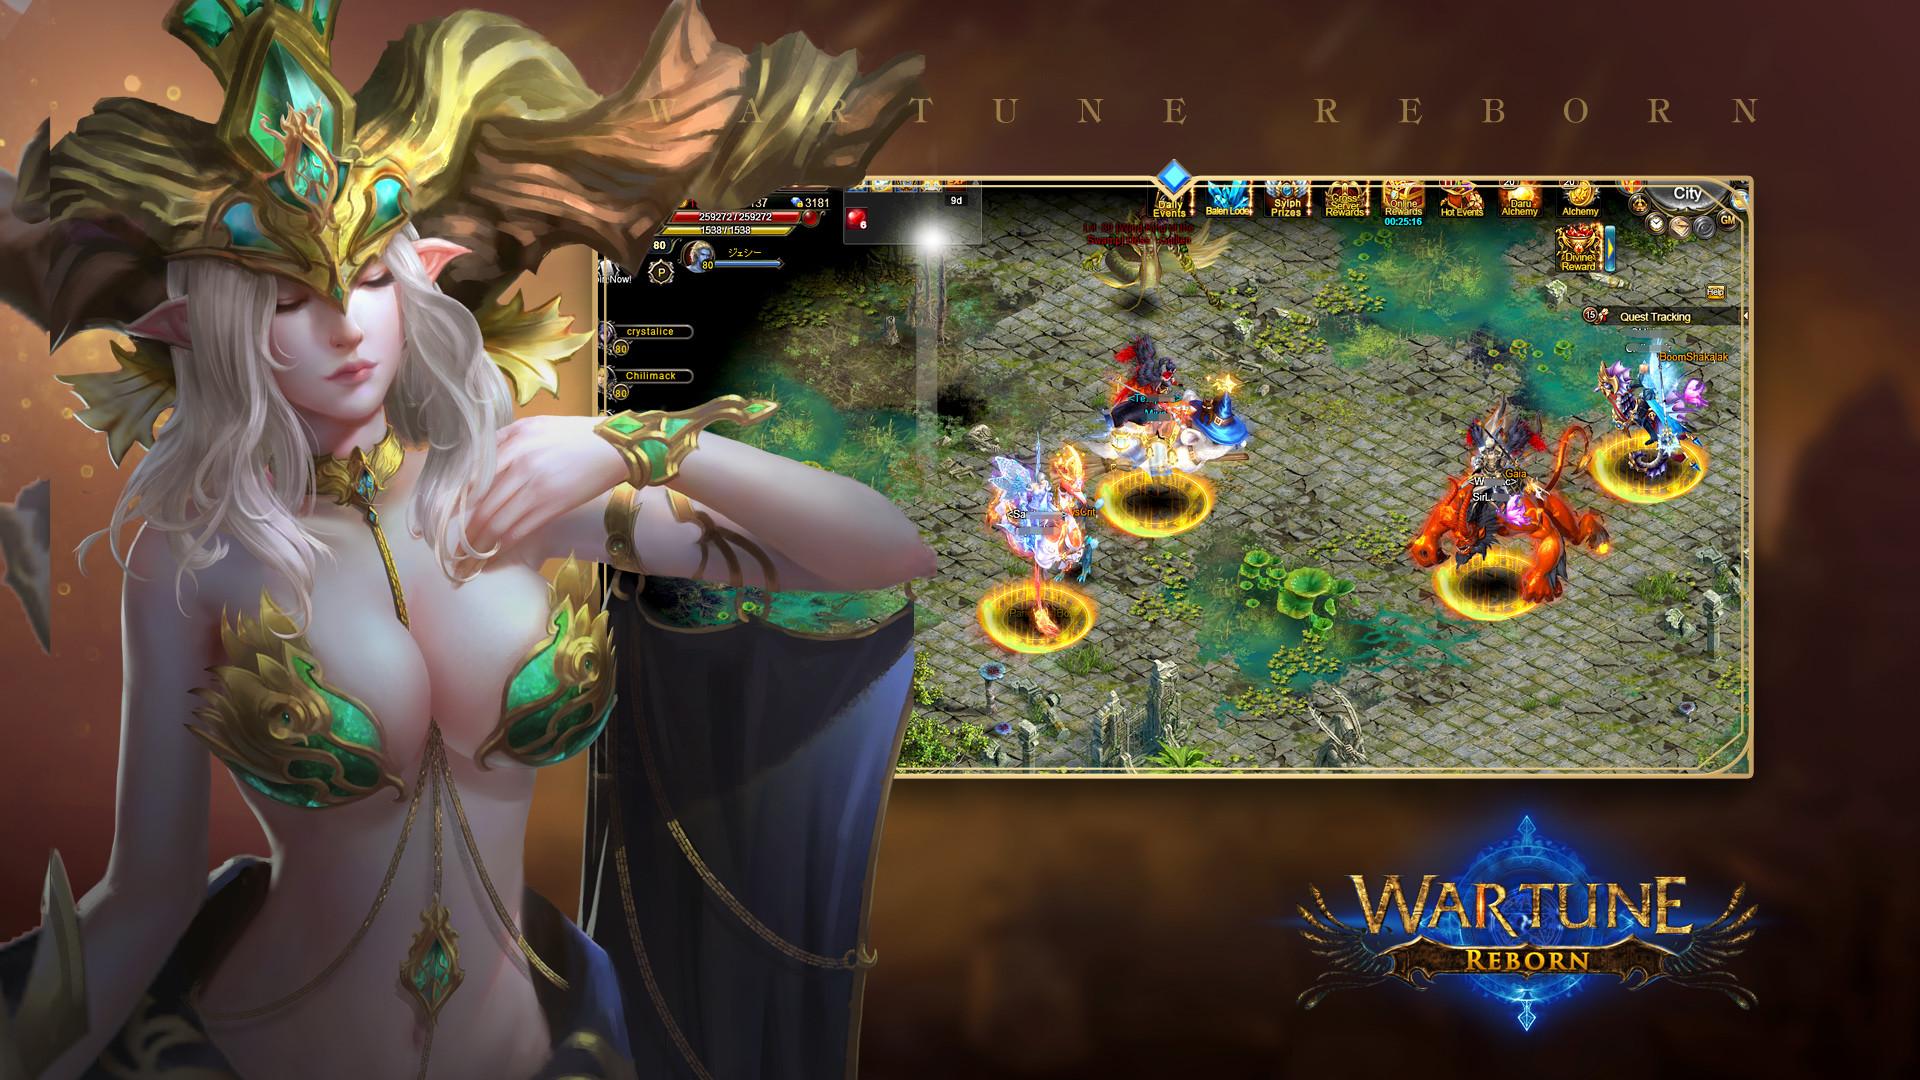 Screenshot №5 from game Wartune Reborn